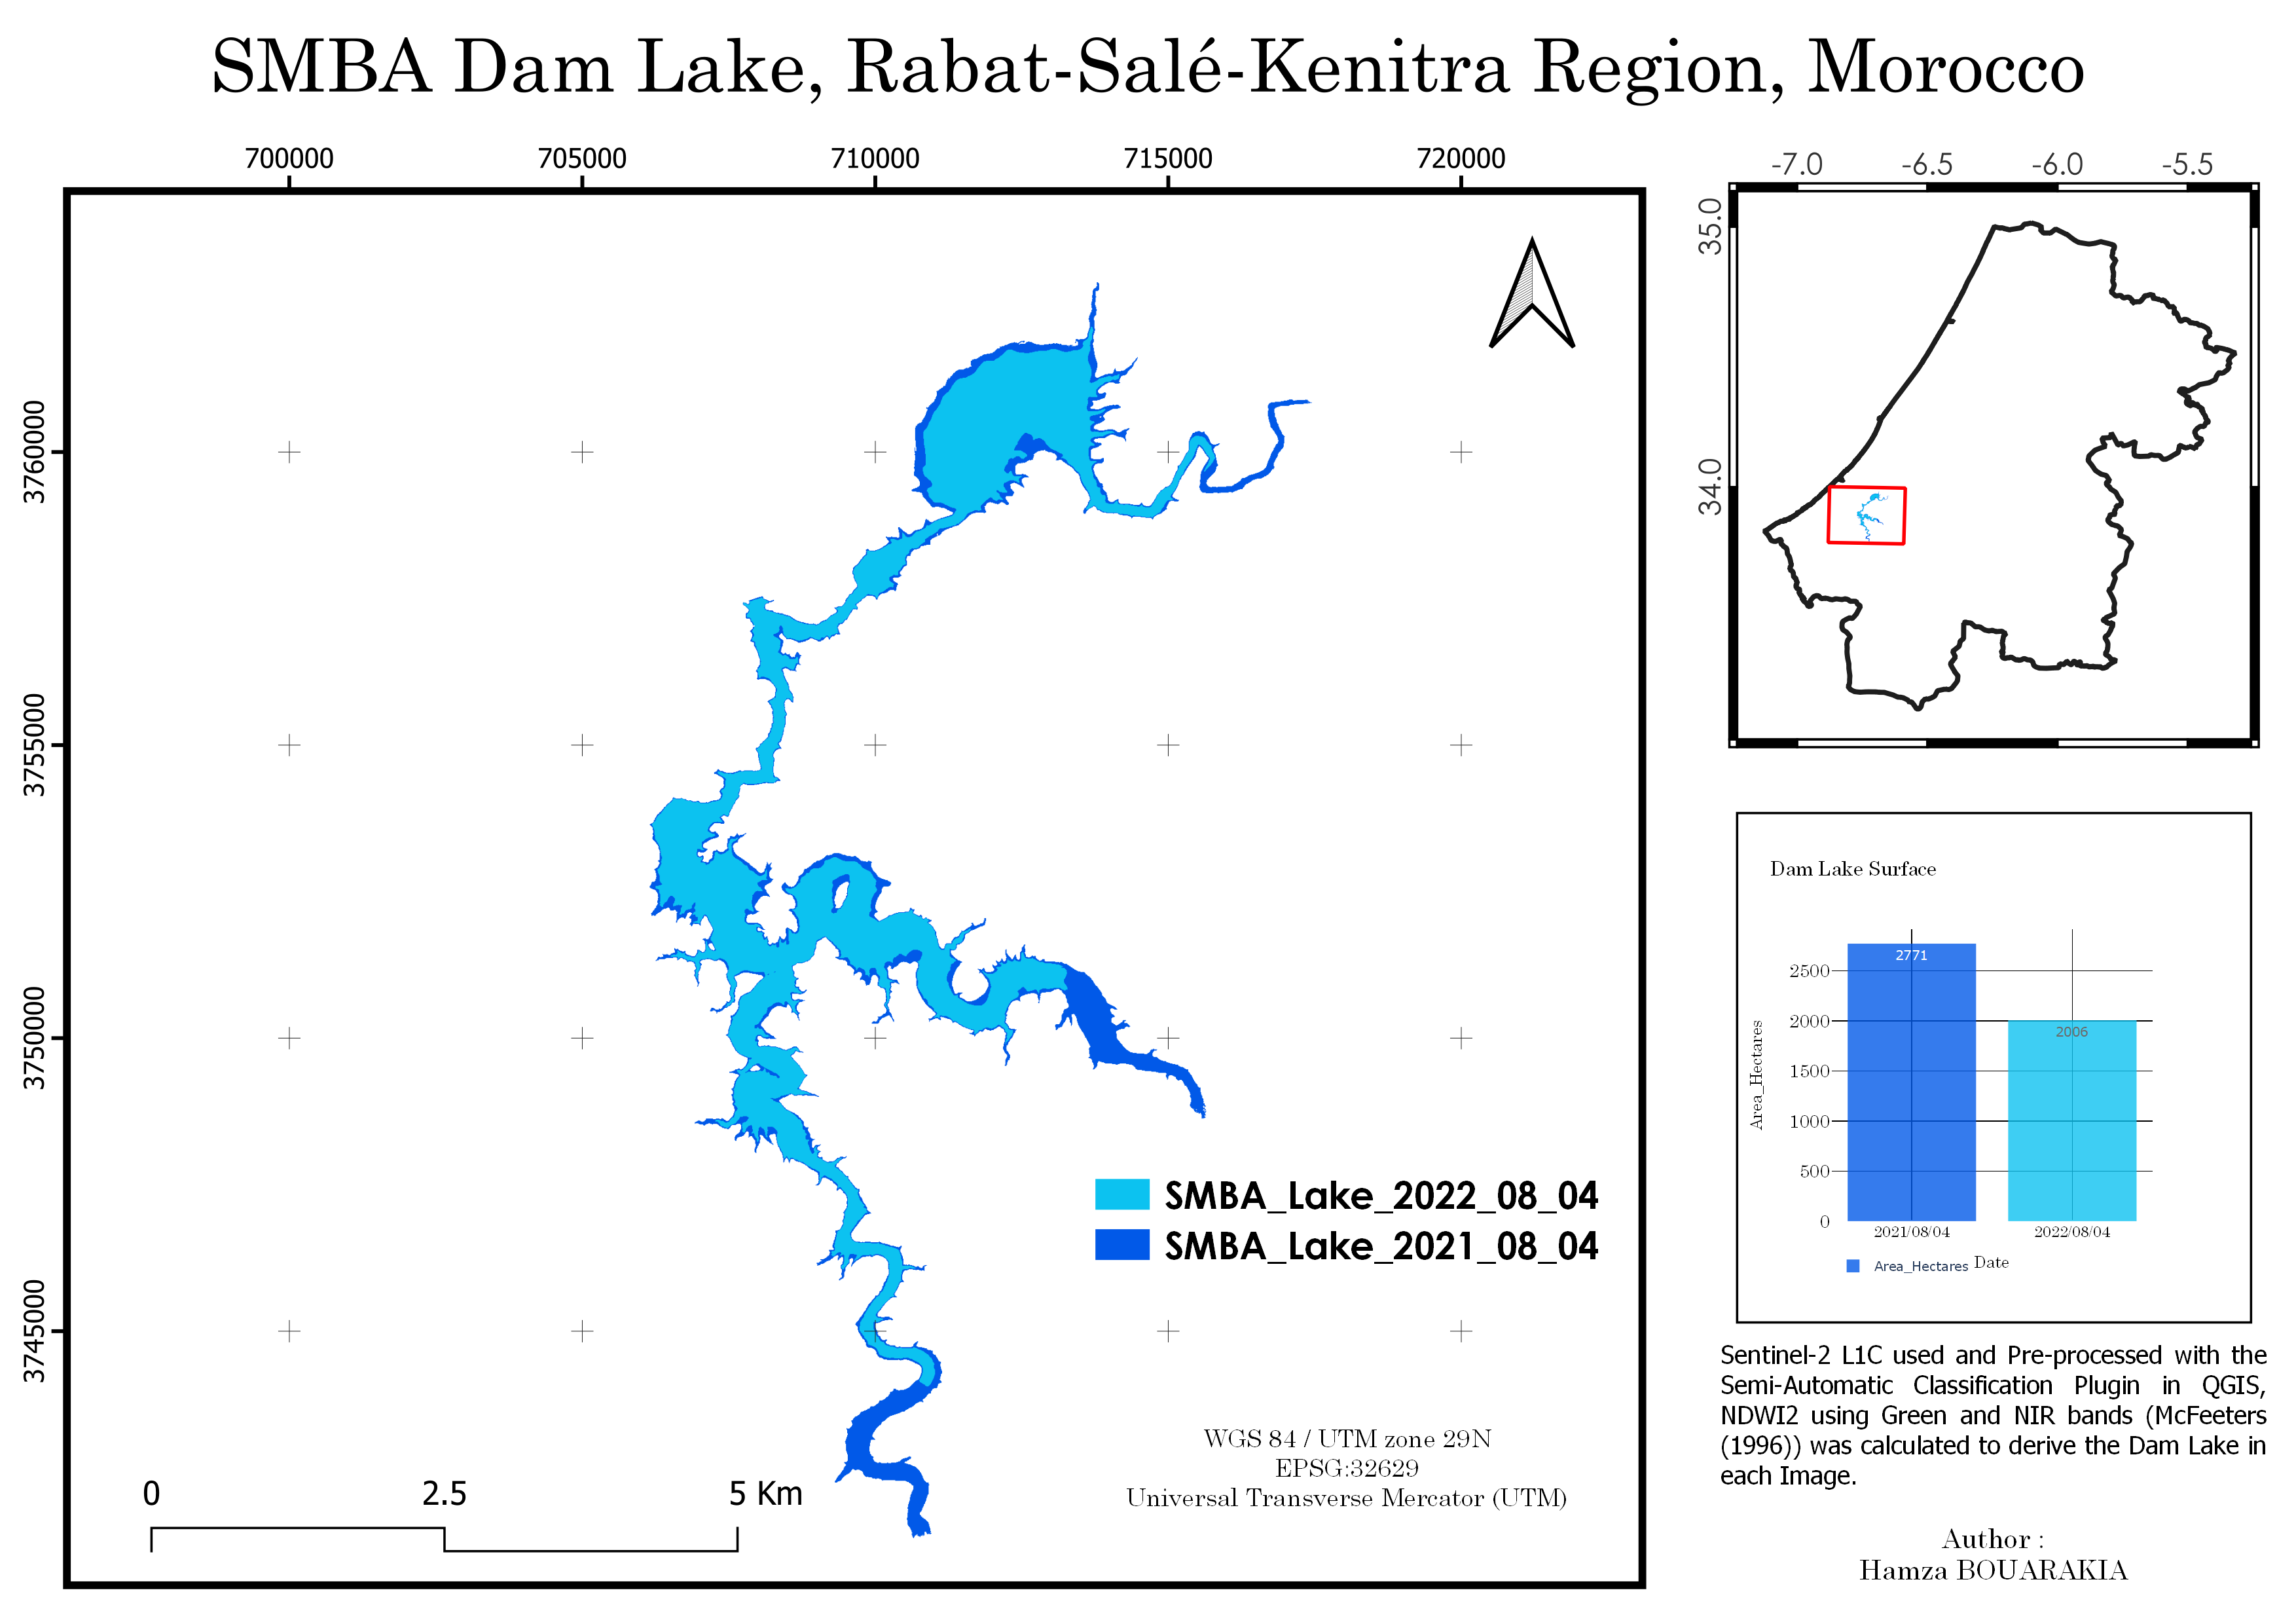 SMBA Dam Lake 2021-2022, Morocco